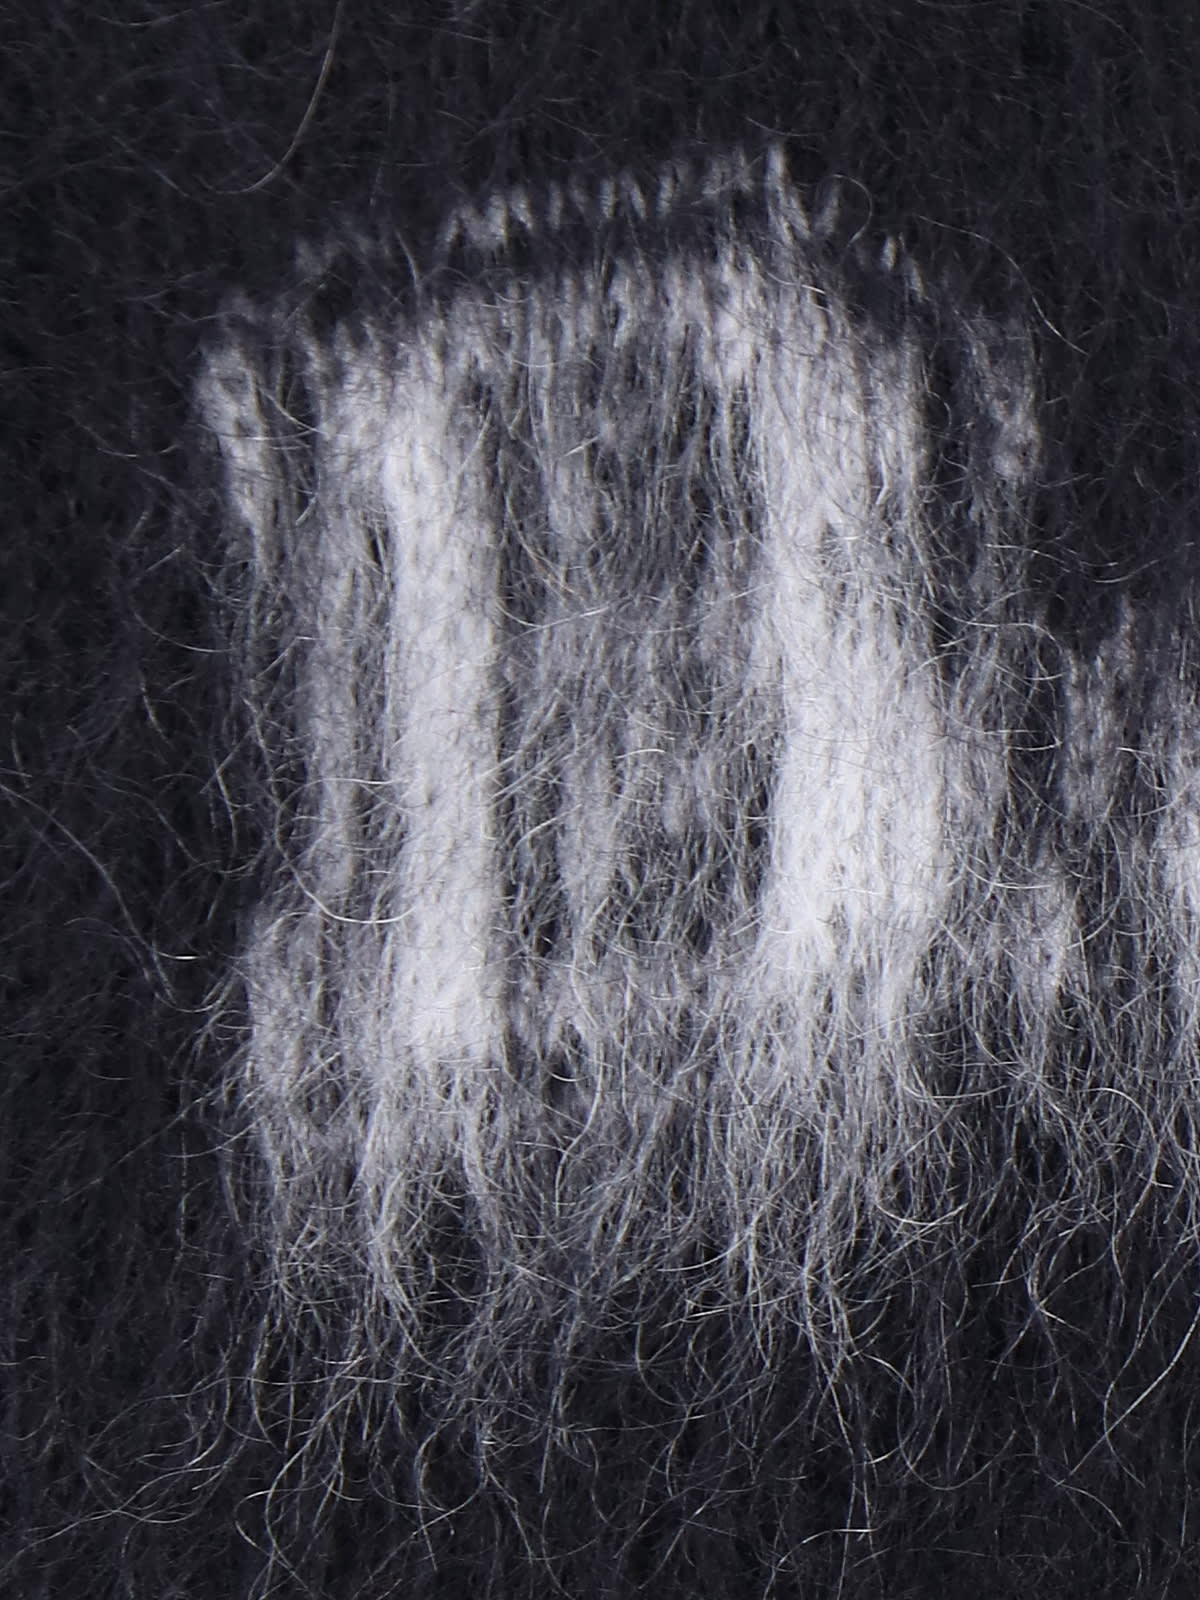 Shop Balmain Logo Sweater In Noir/blanc